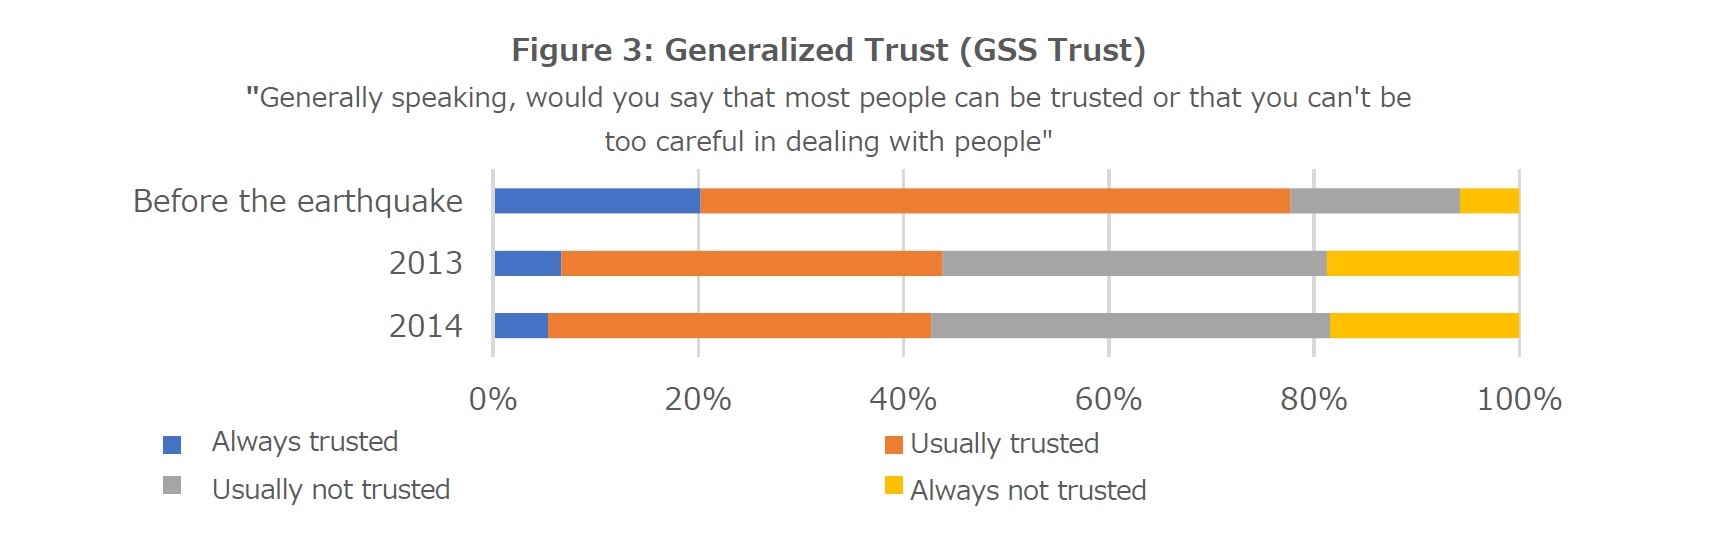 Figure 3: Generalized Trust (GSS Trust)